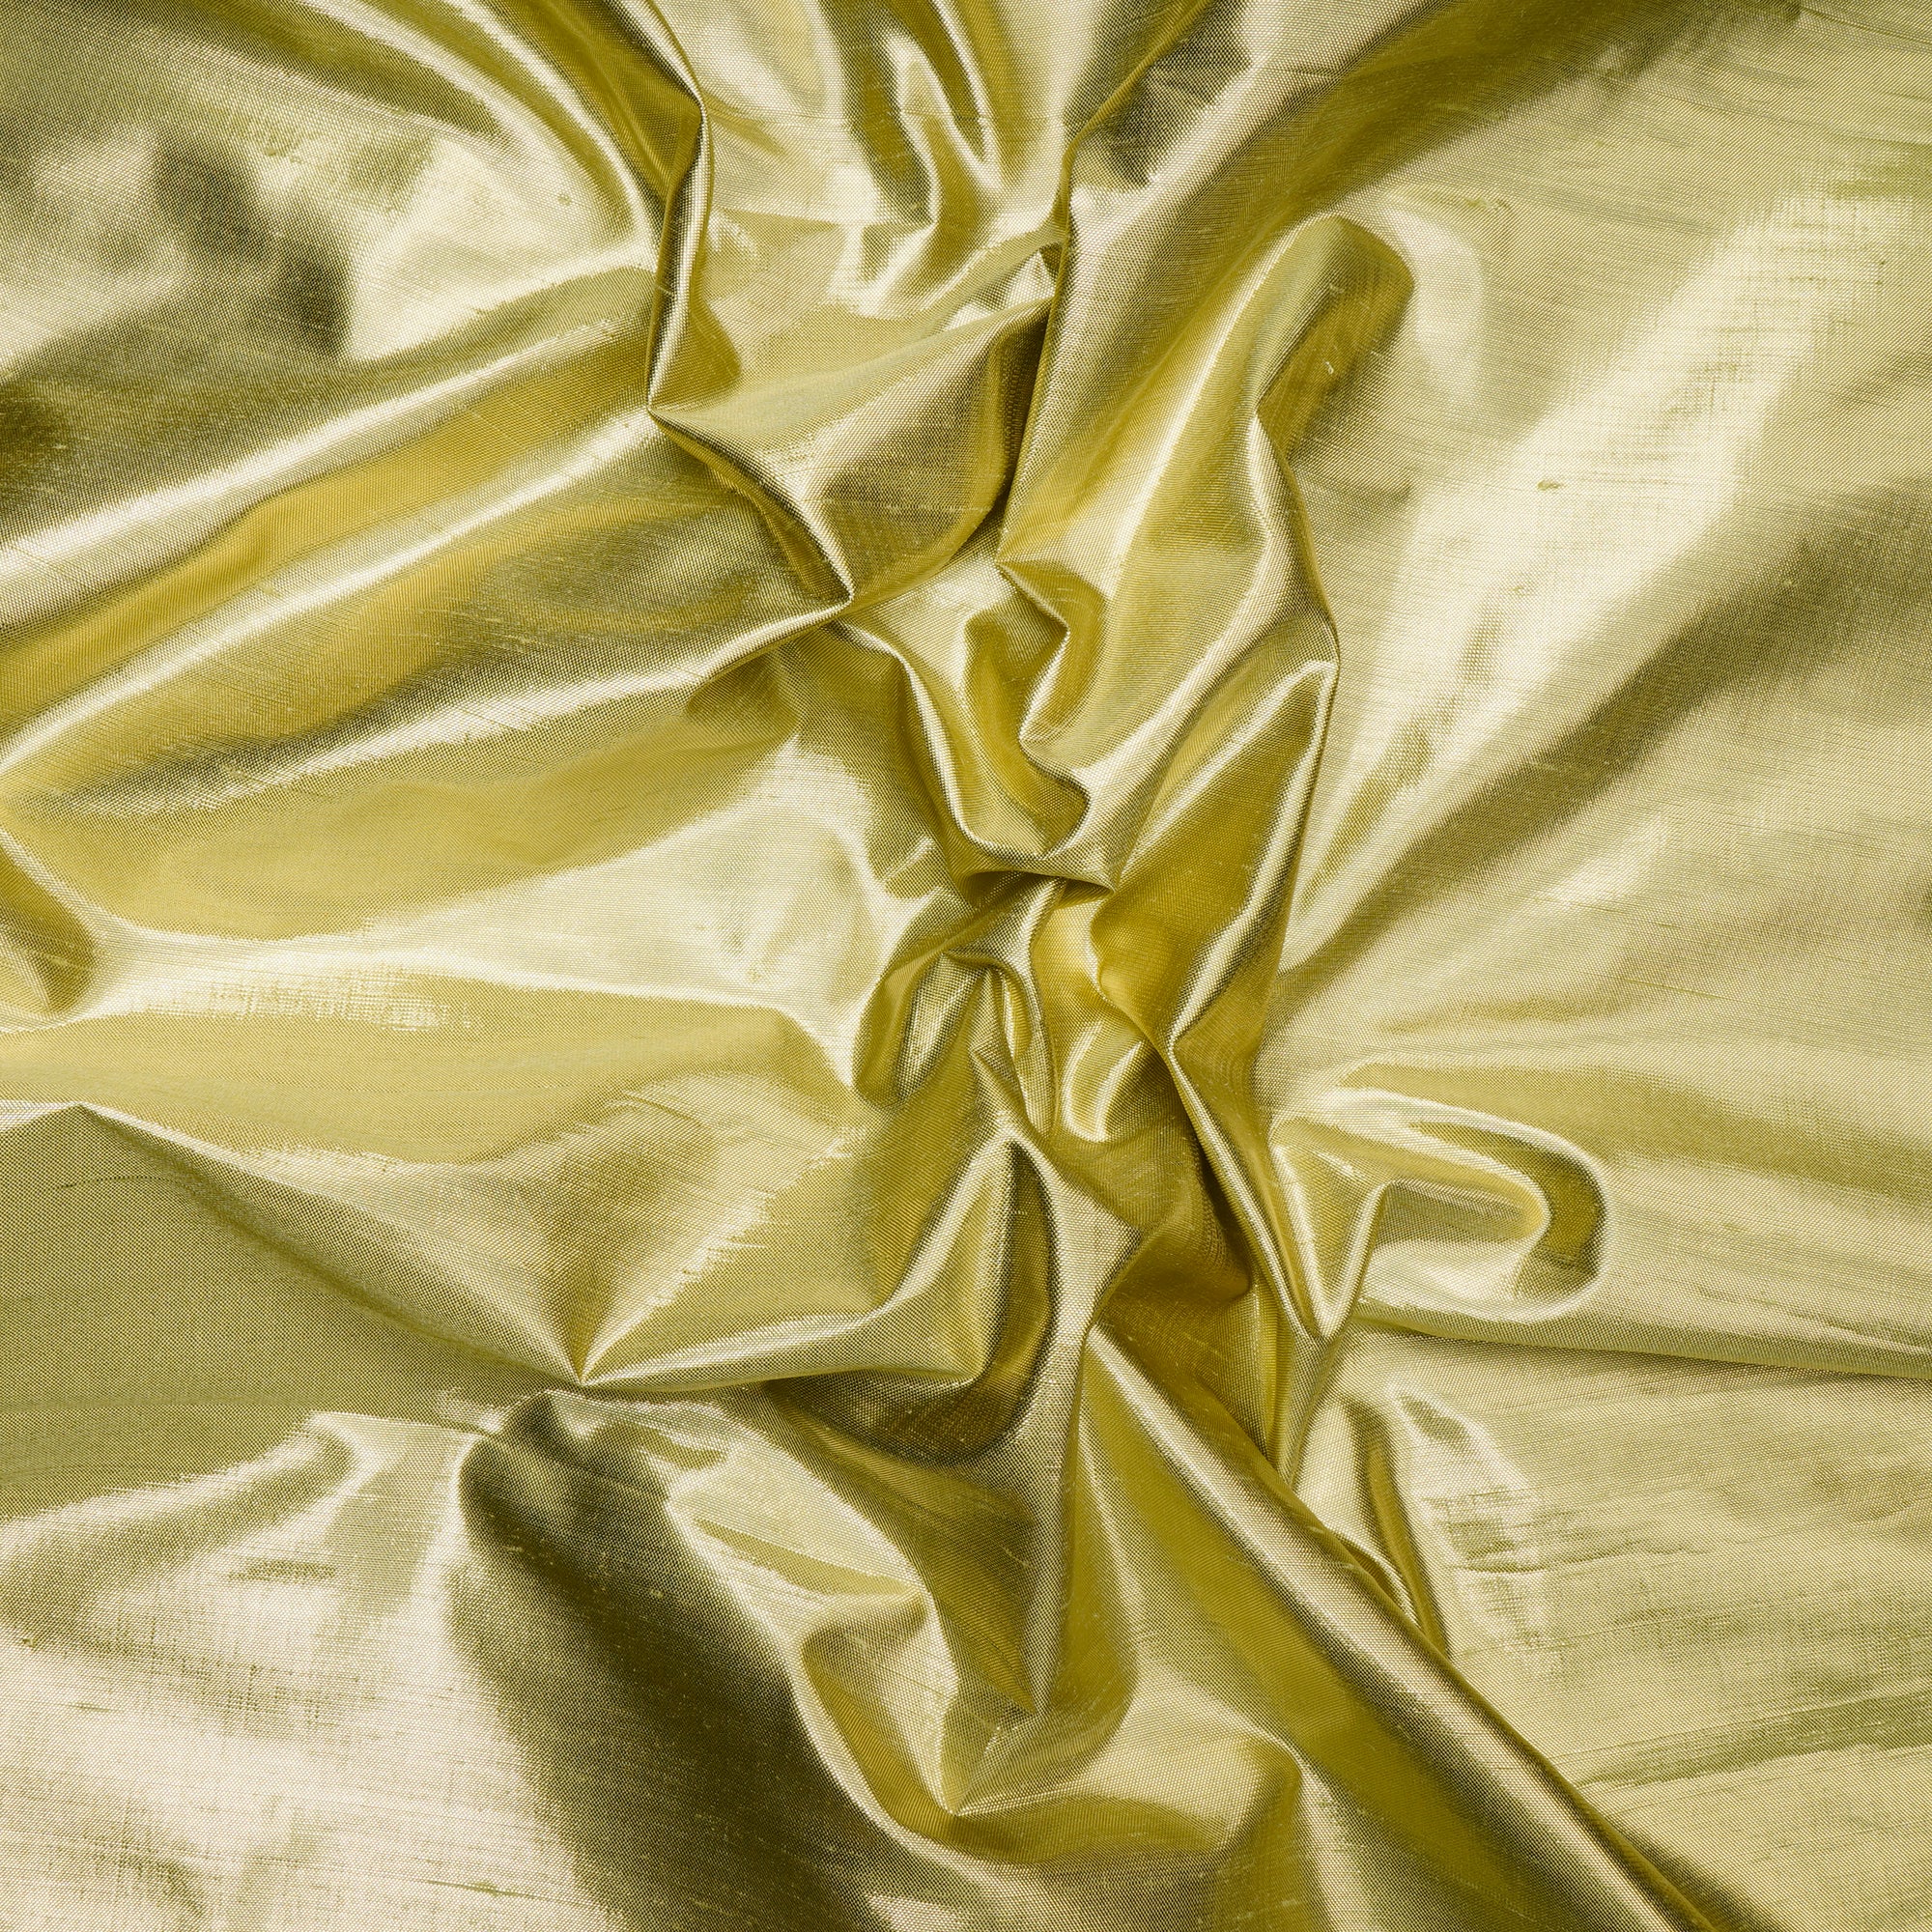 Quality New 250g colorful unique Gold silver silk cotton Metallic